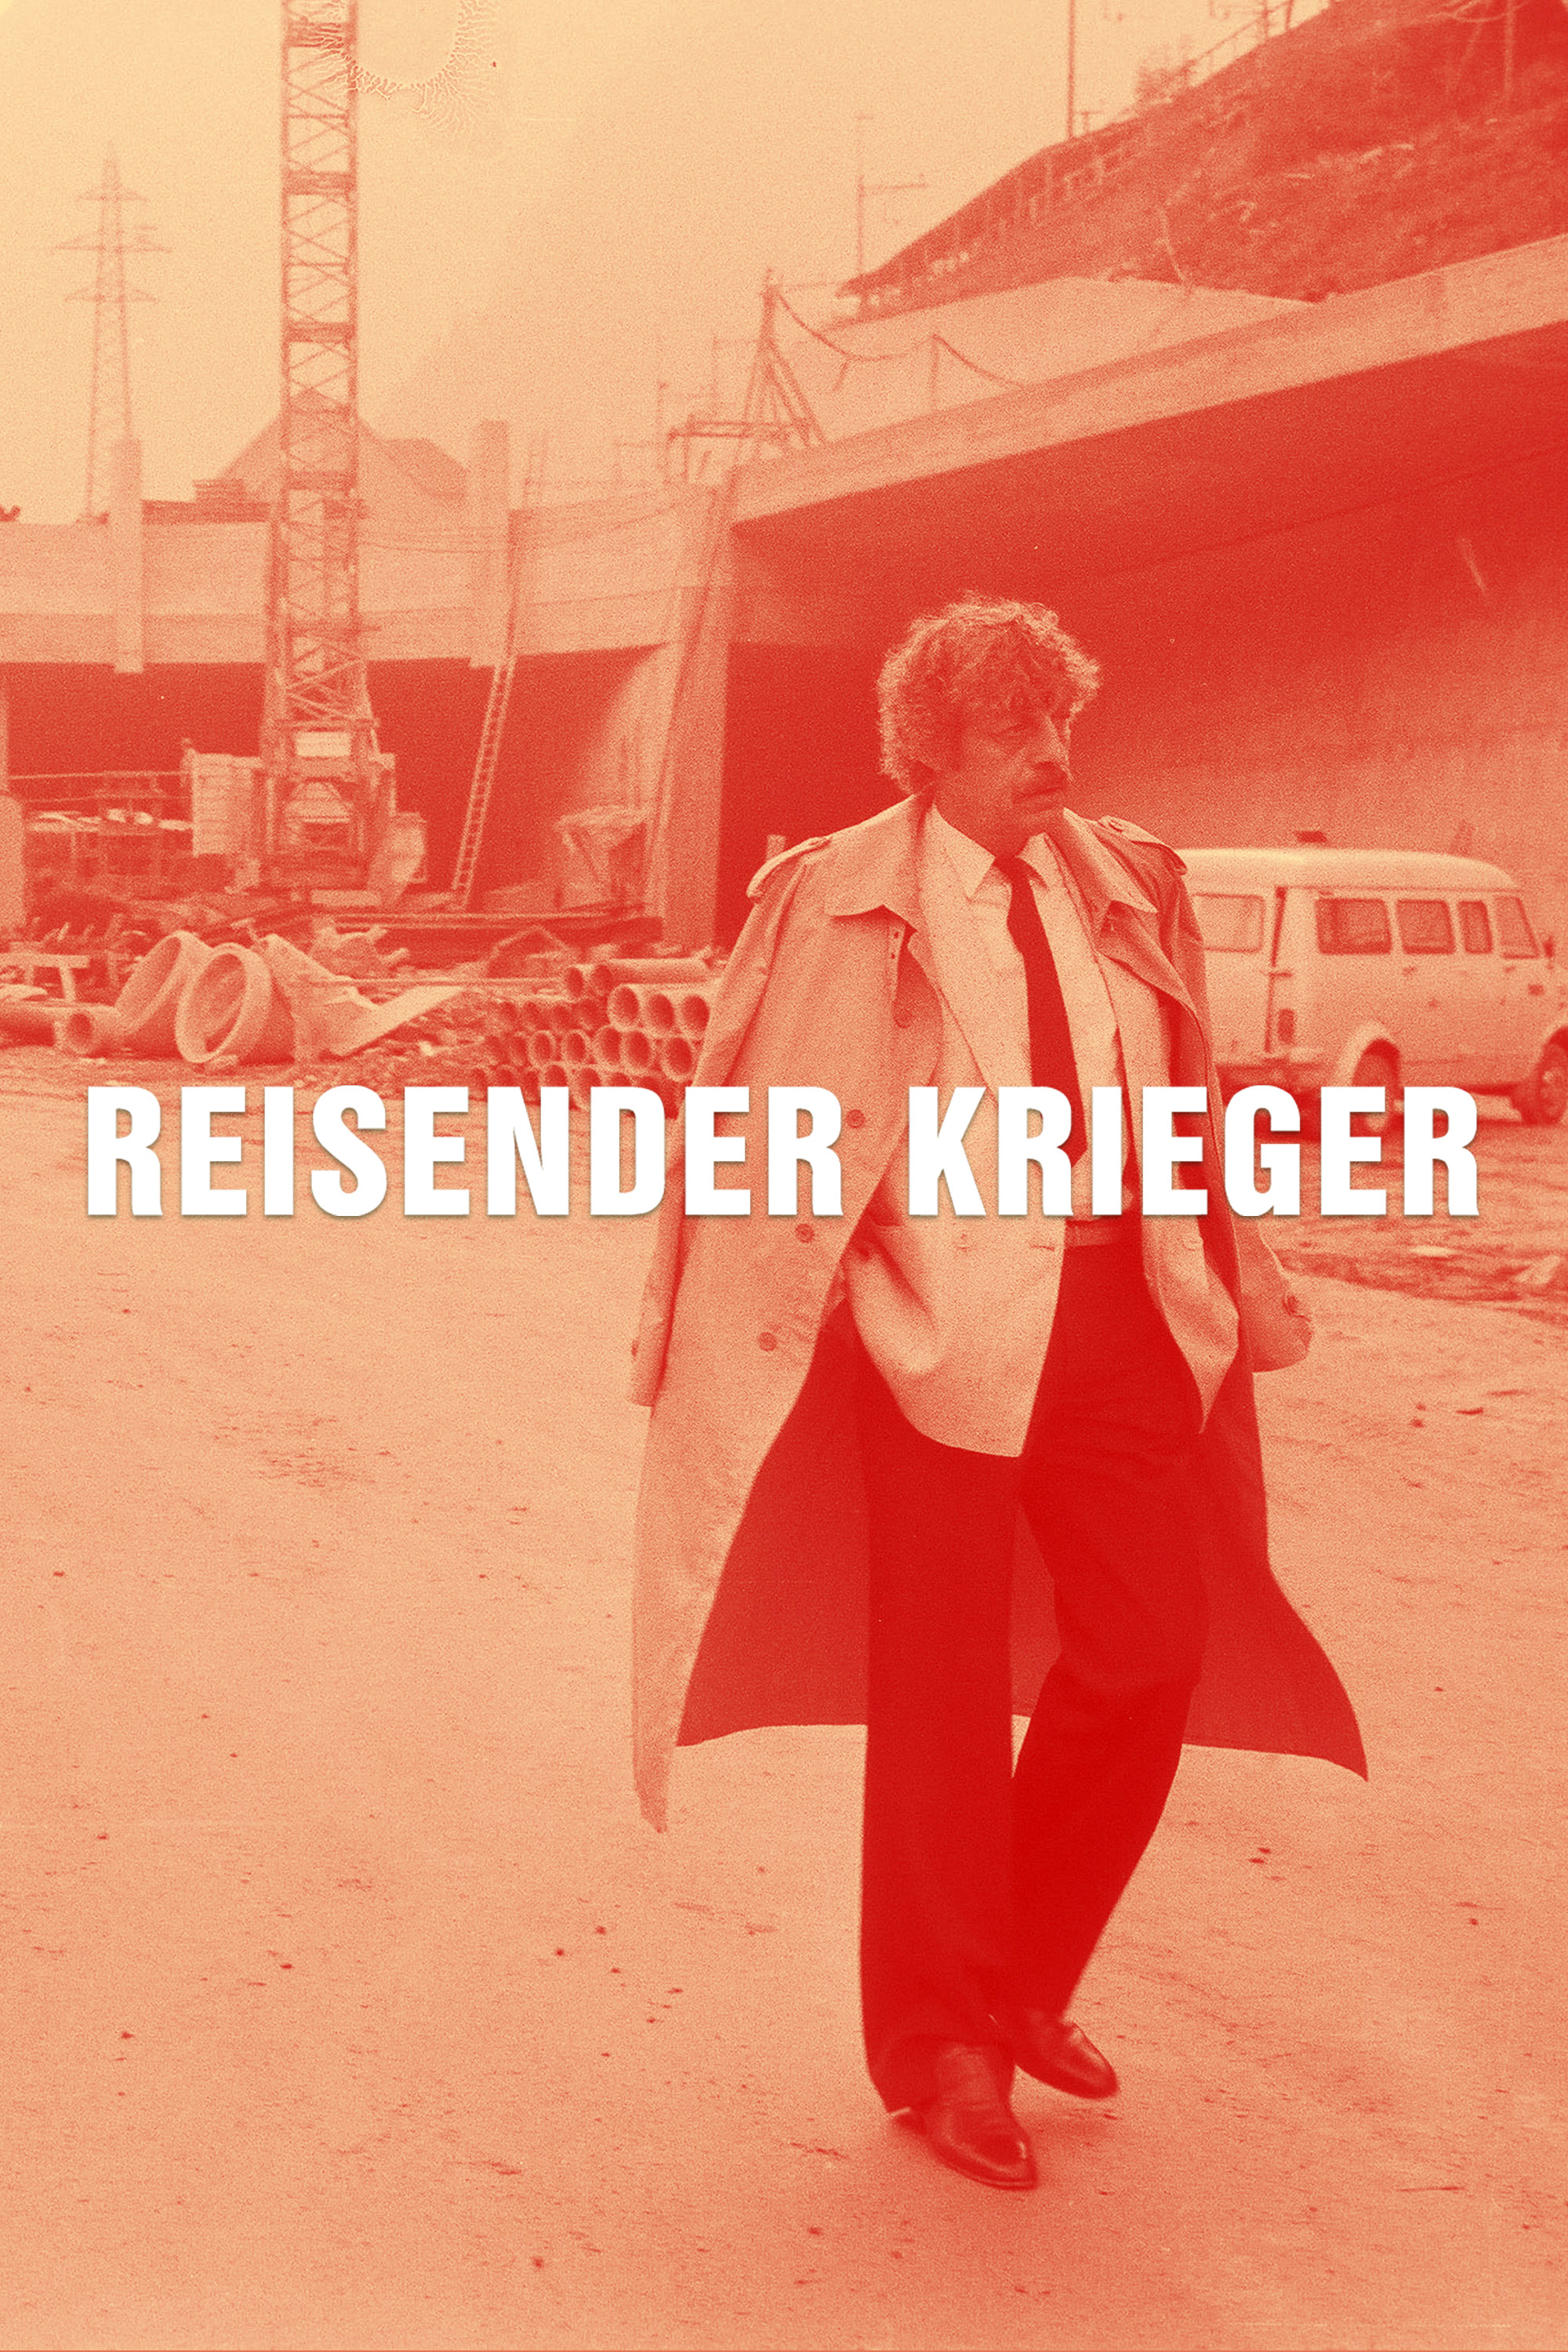 Reisender Krieger (1981) Screenshot 1 